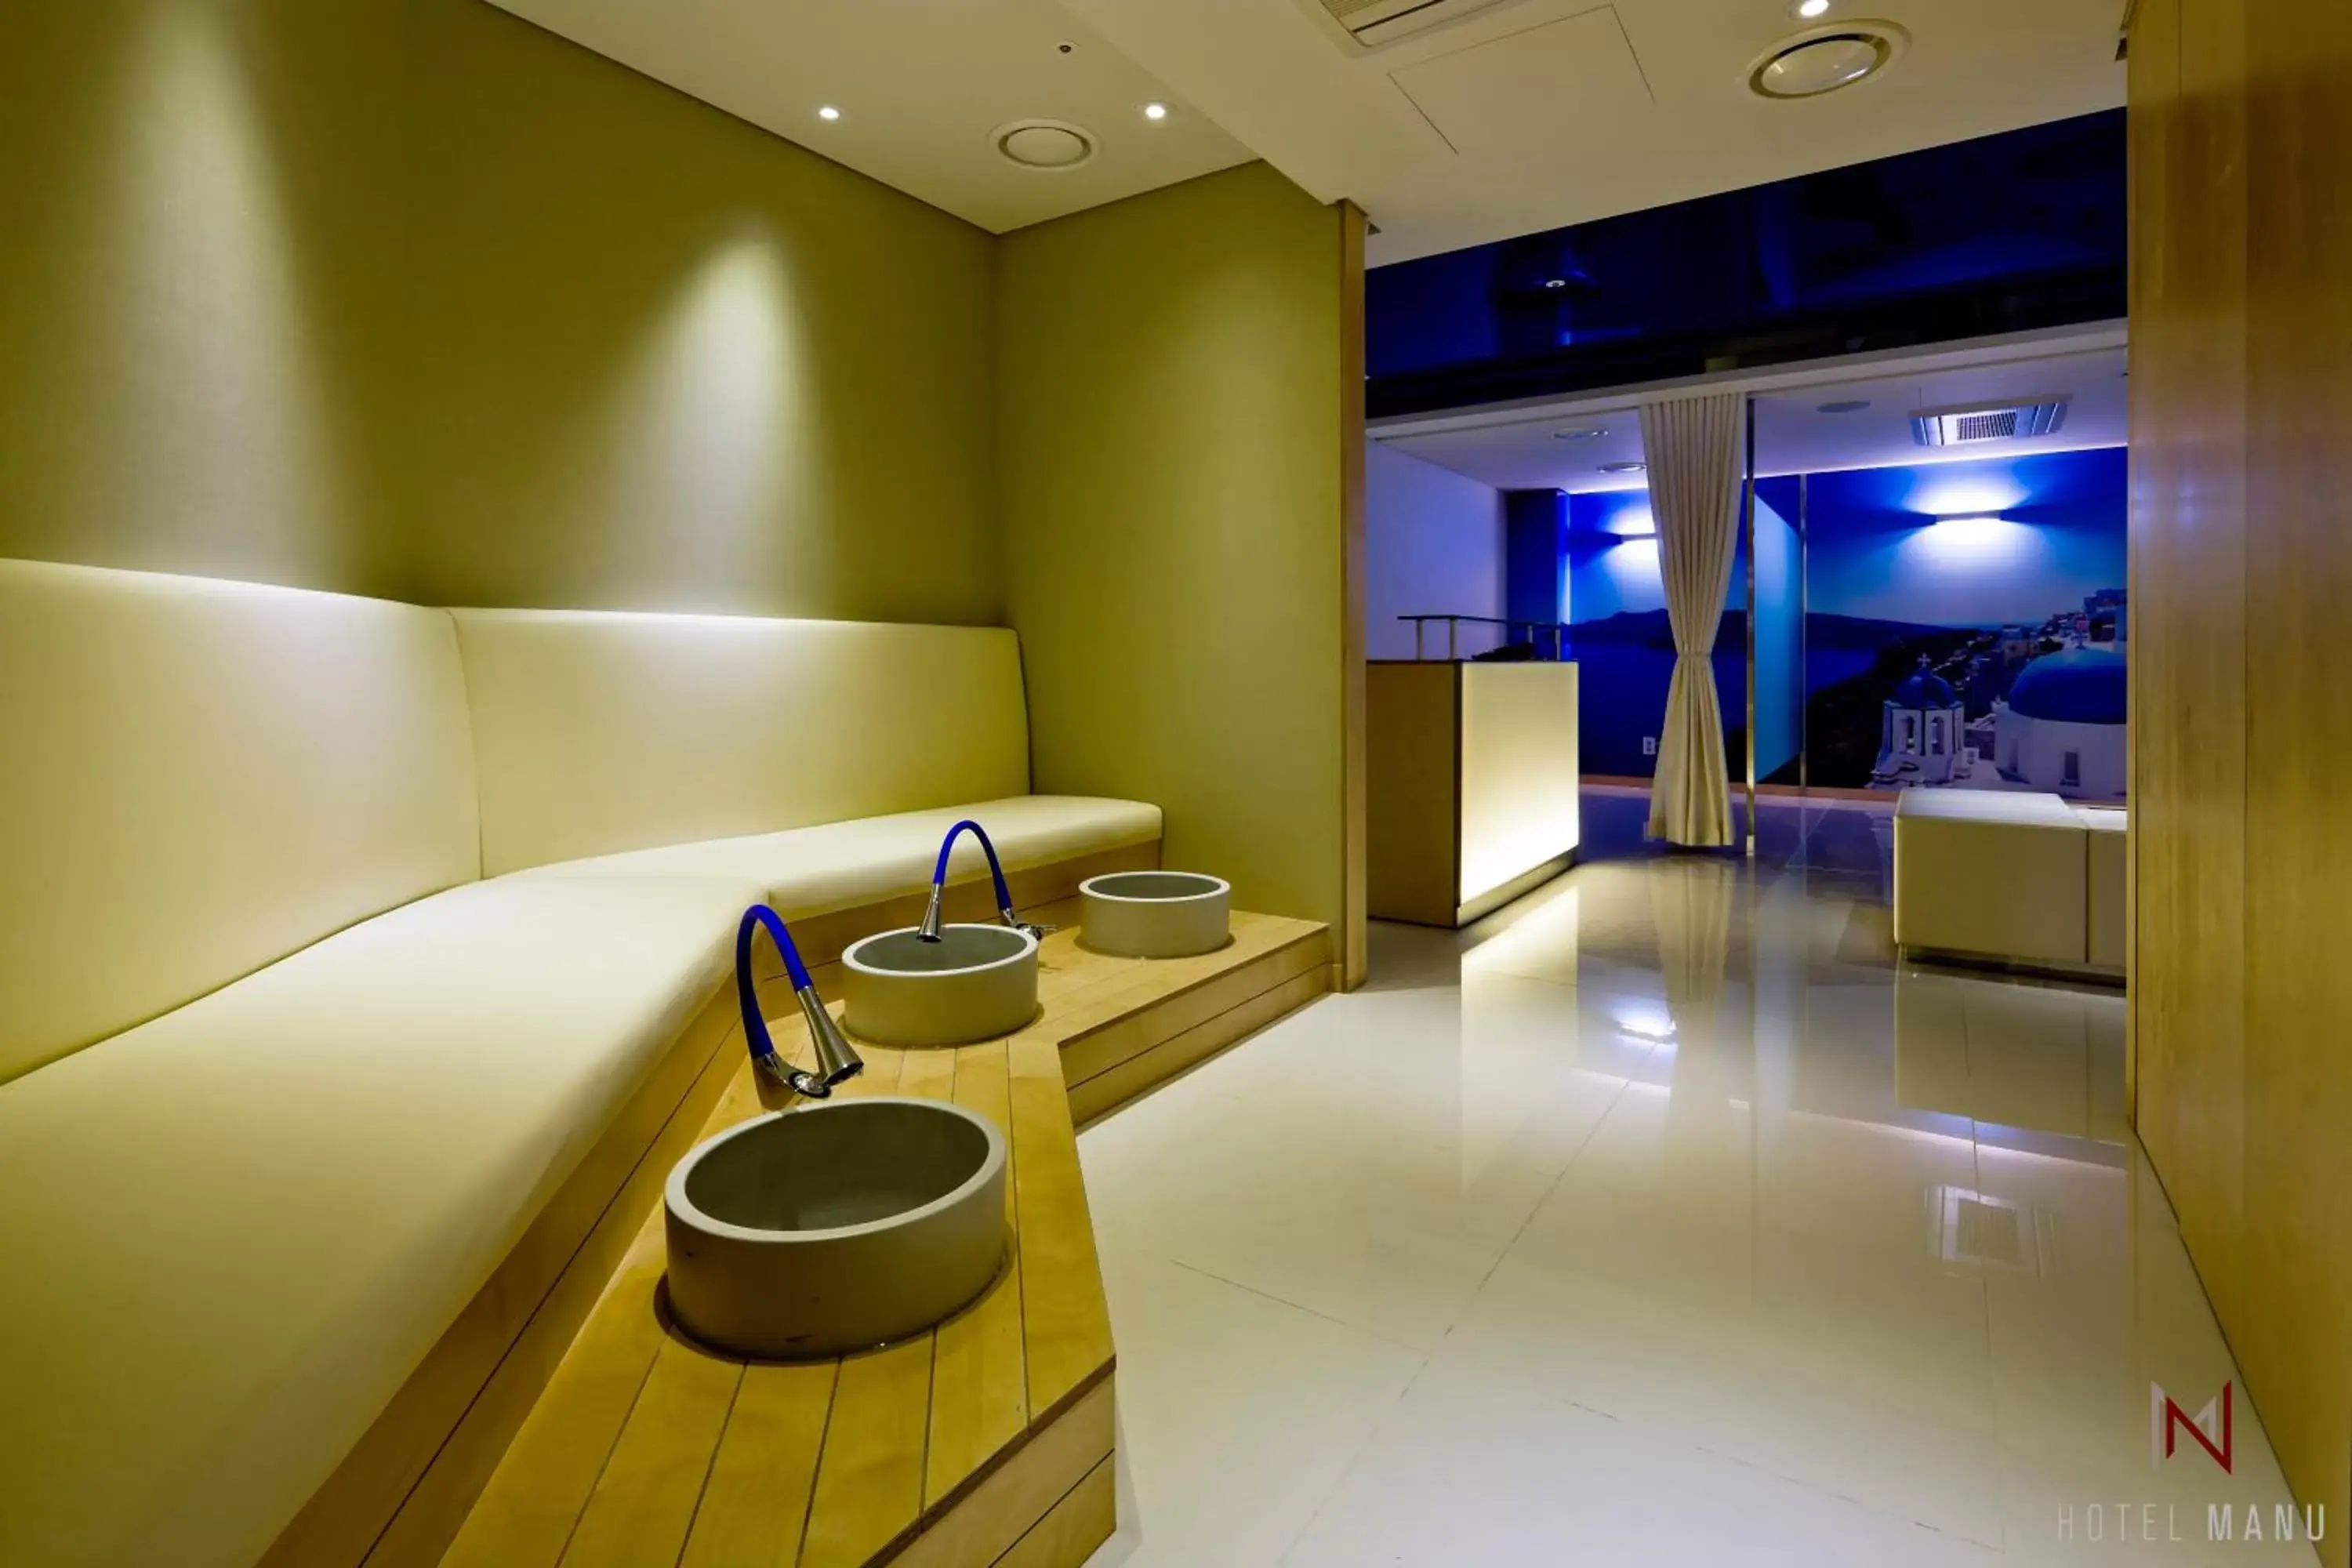 Spa and wellness centre/facilities in Hotel Manu Seoul